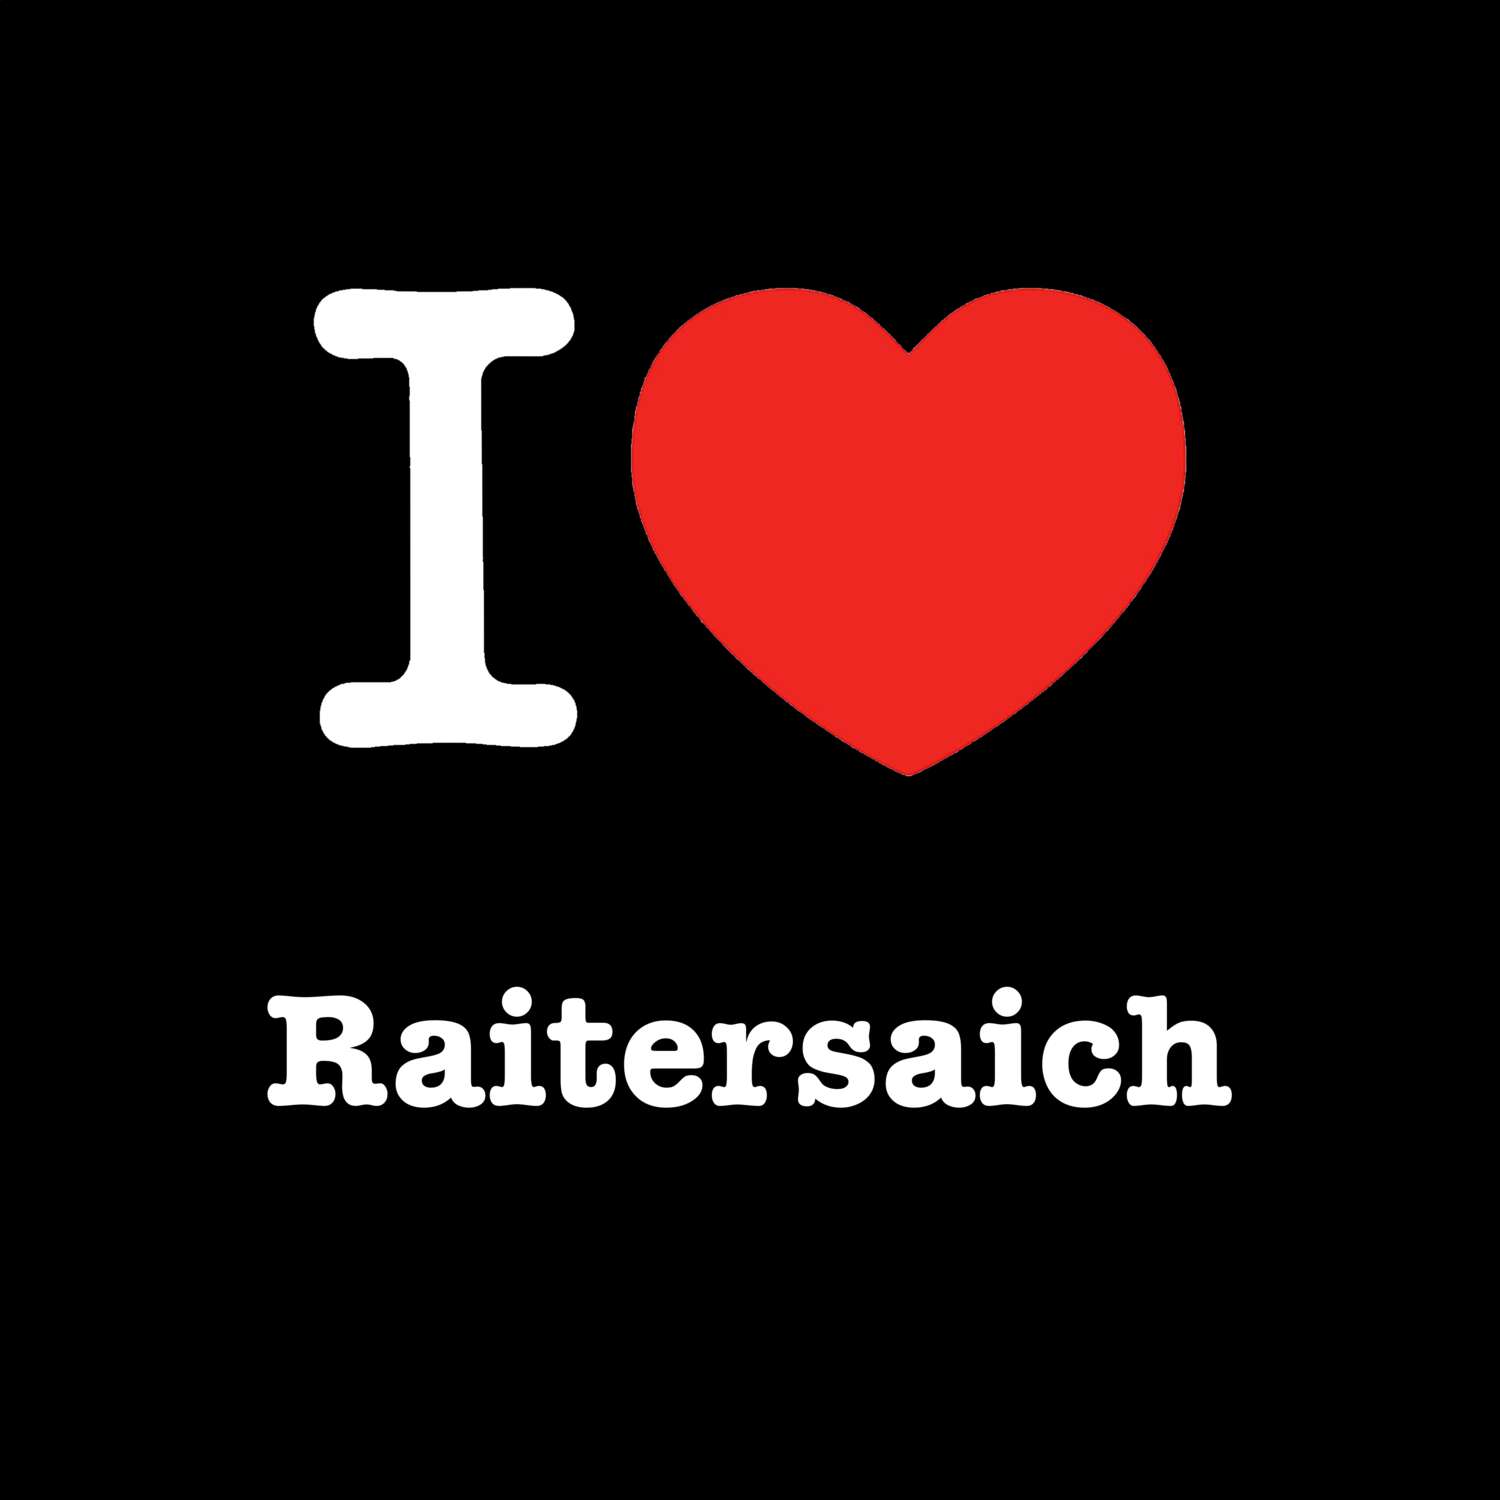 Raitersaich T-Shirt »I love«